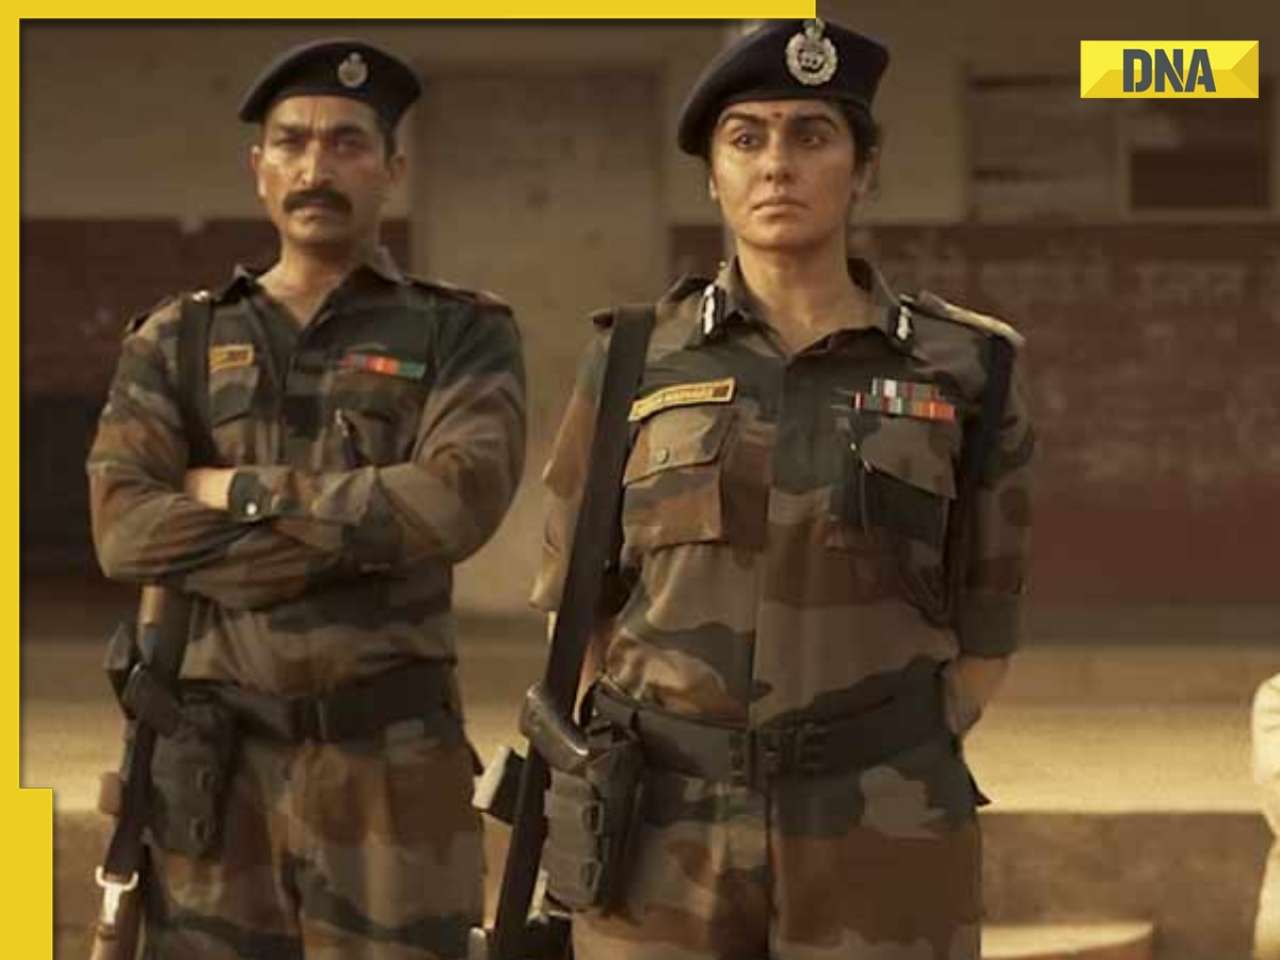 Bastar The Naxal Story box office collection day 4: Adah Sharma film struggles, fails Monday test, earns just Rs 24 lakh